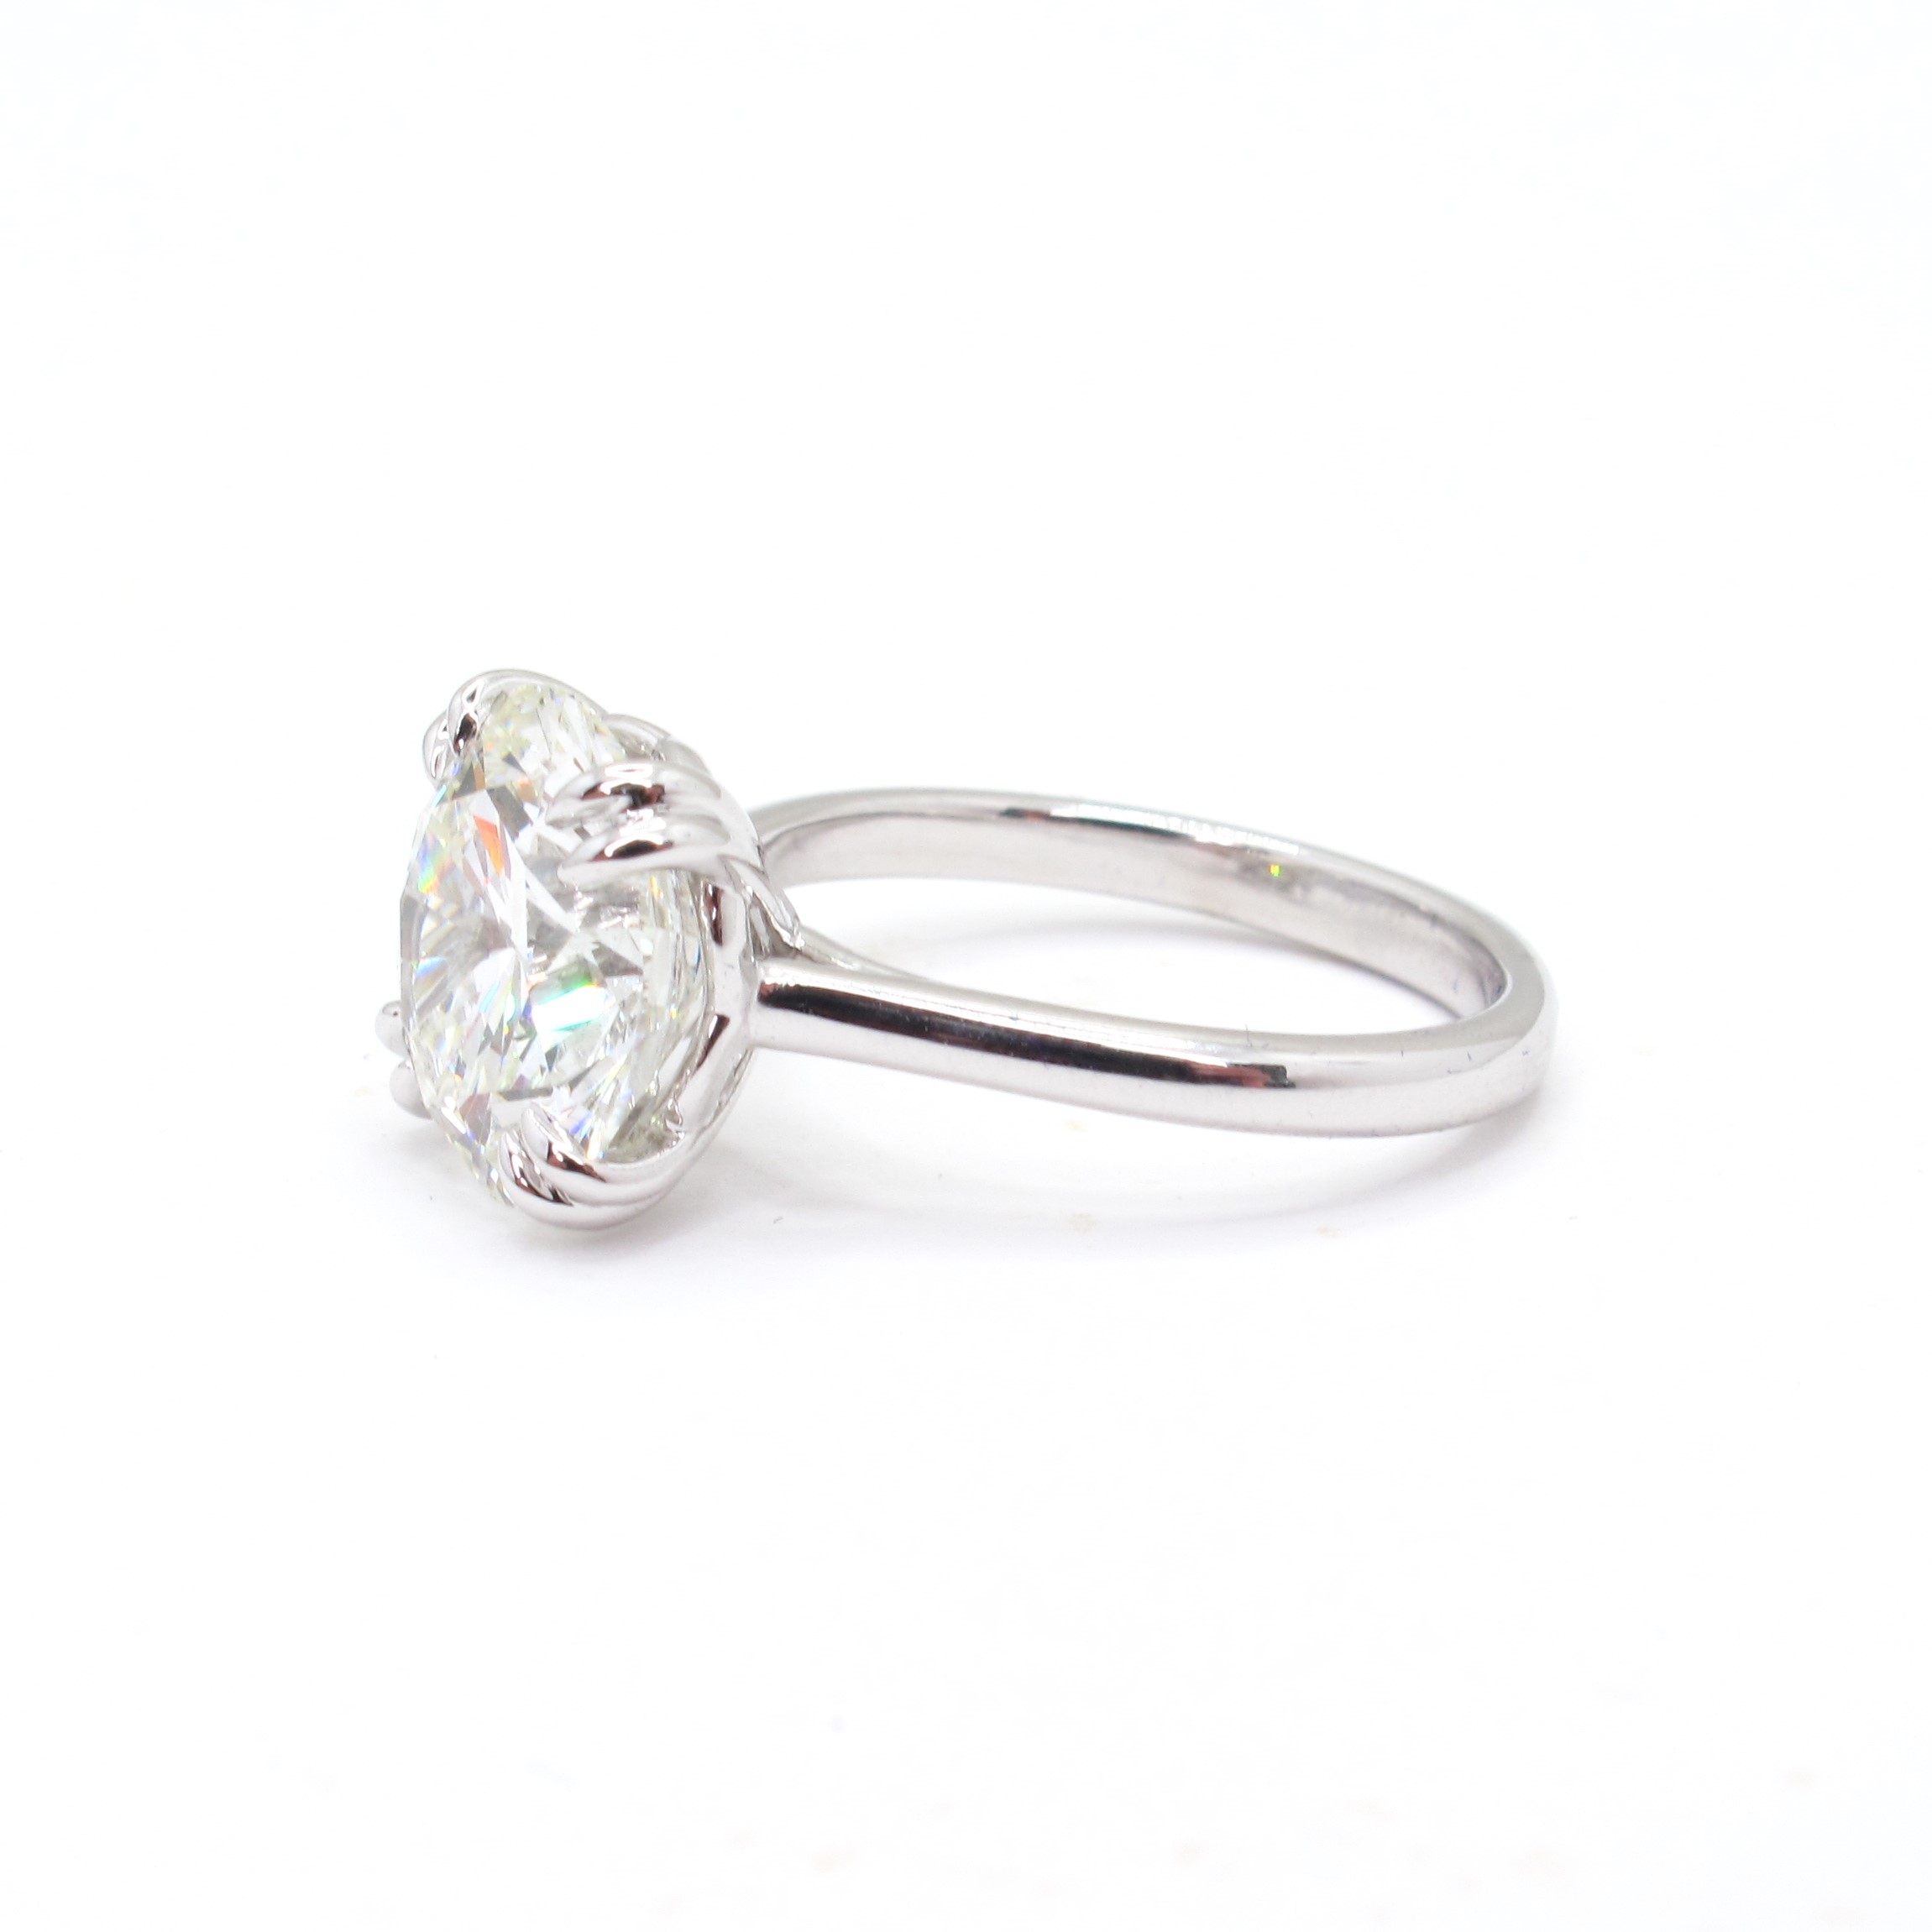 14Kt One Stone Diamond Ring | SEHGAL GOLD ORNAMENTS PVT. LTD.